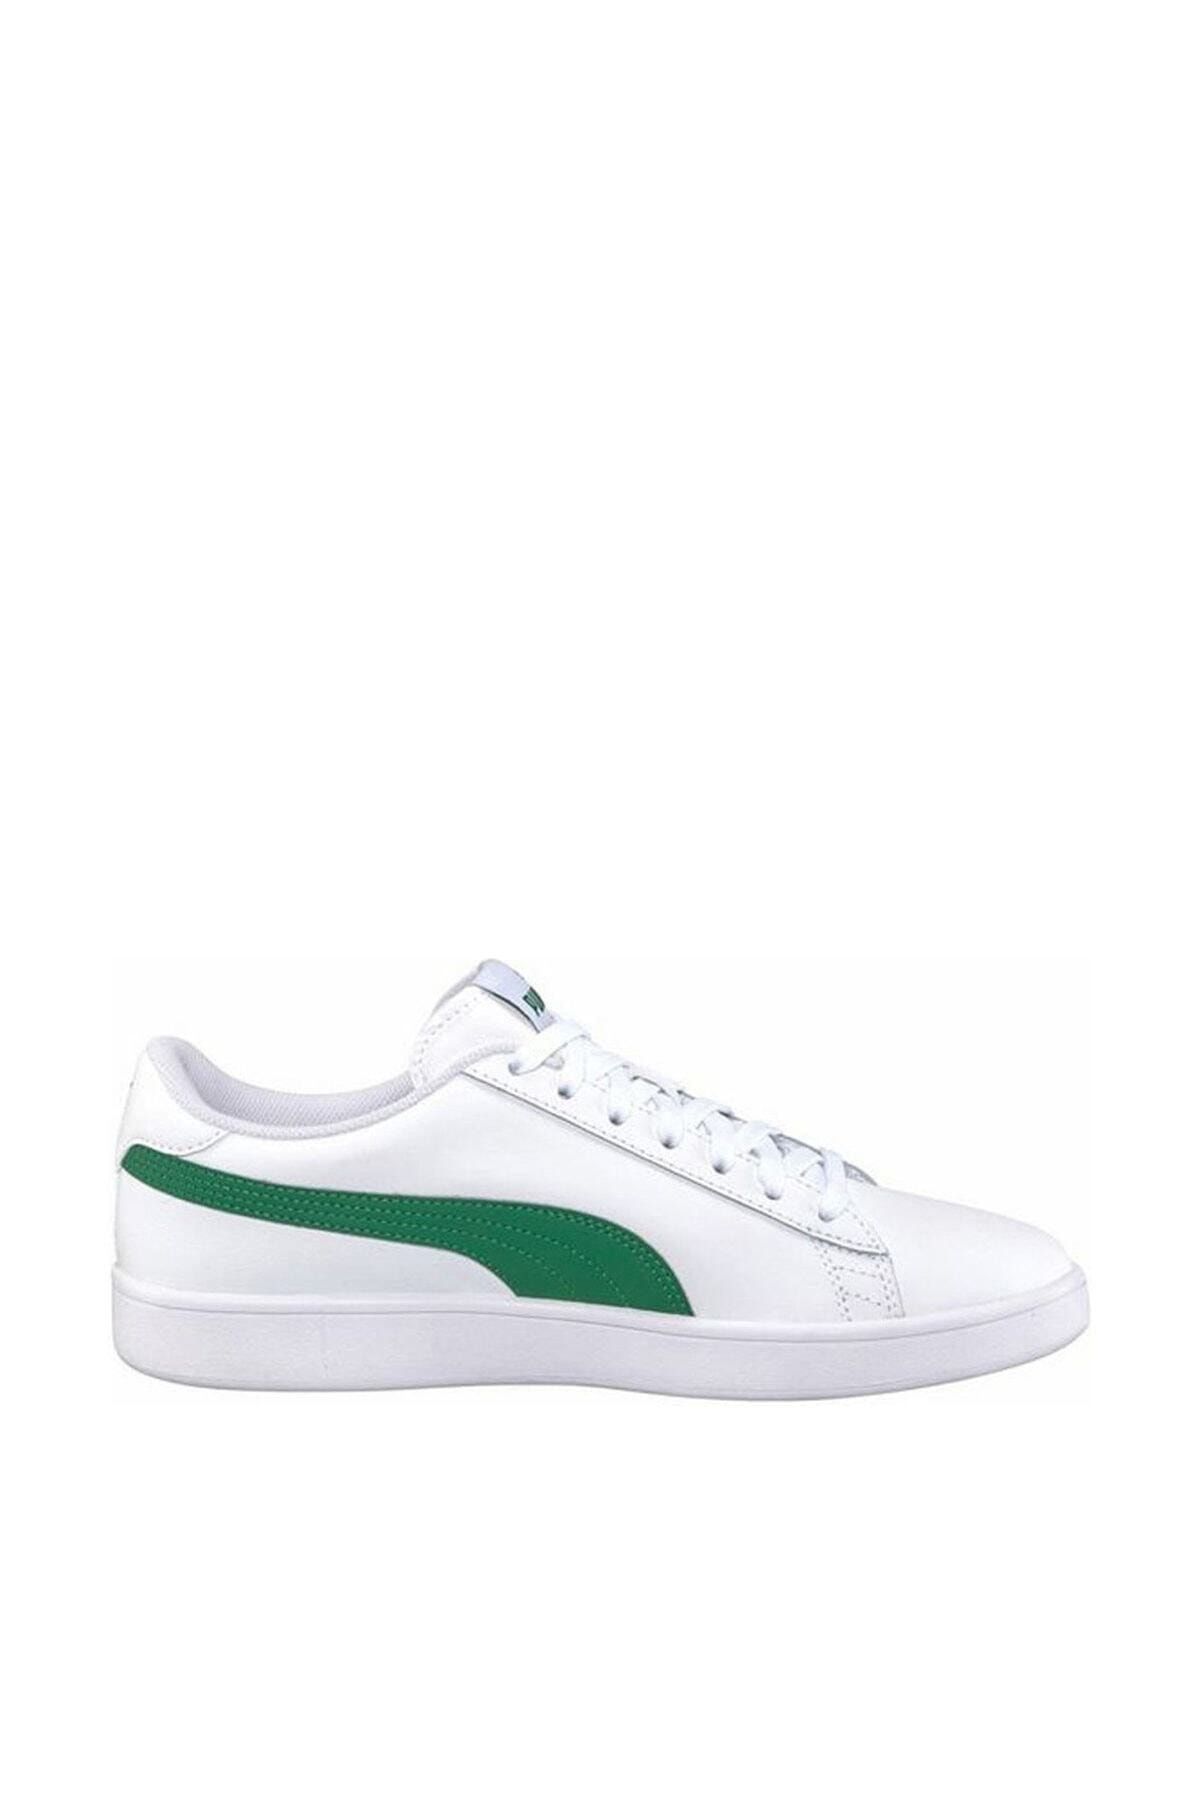 Puma Smash V2 L Jr Beyaz Yeşil Erkek Sneaker Ayakkabı 100346459